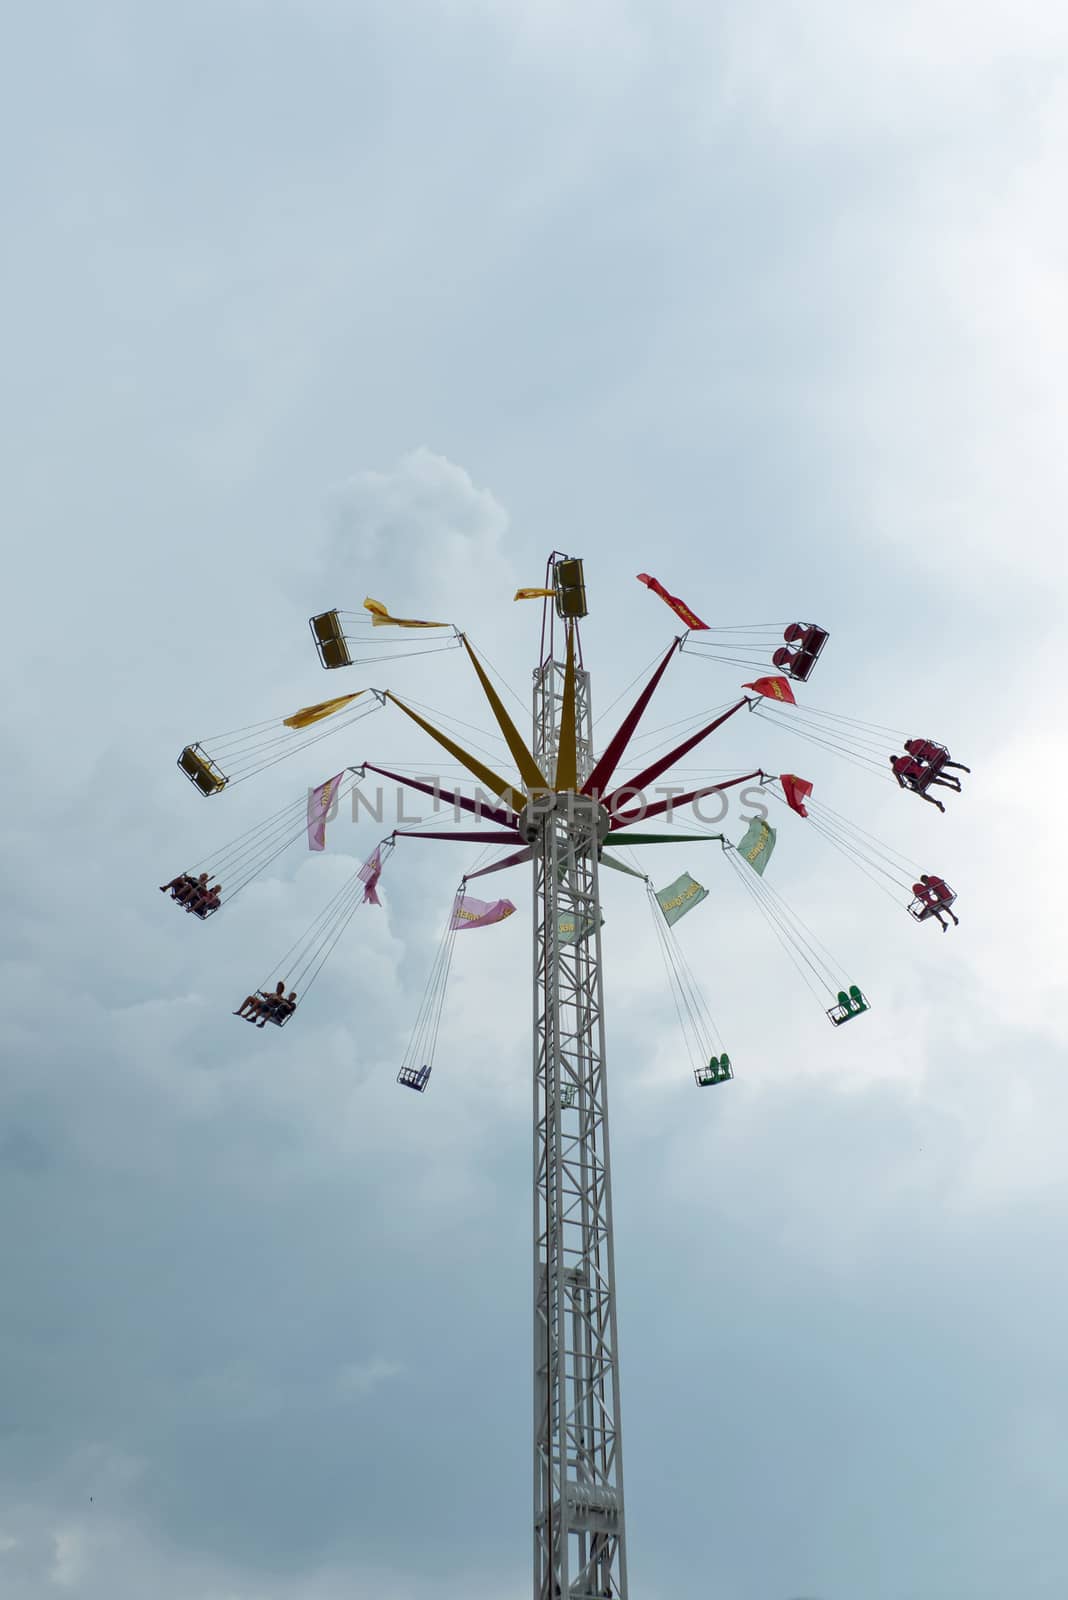 Giant Swing Ride on Fair